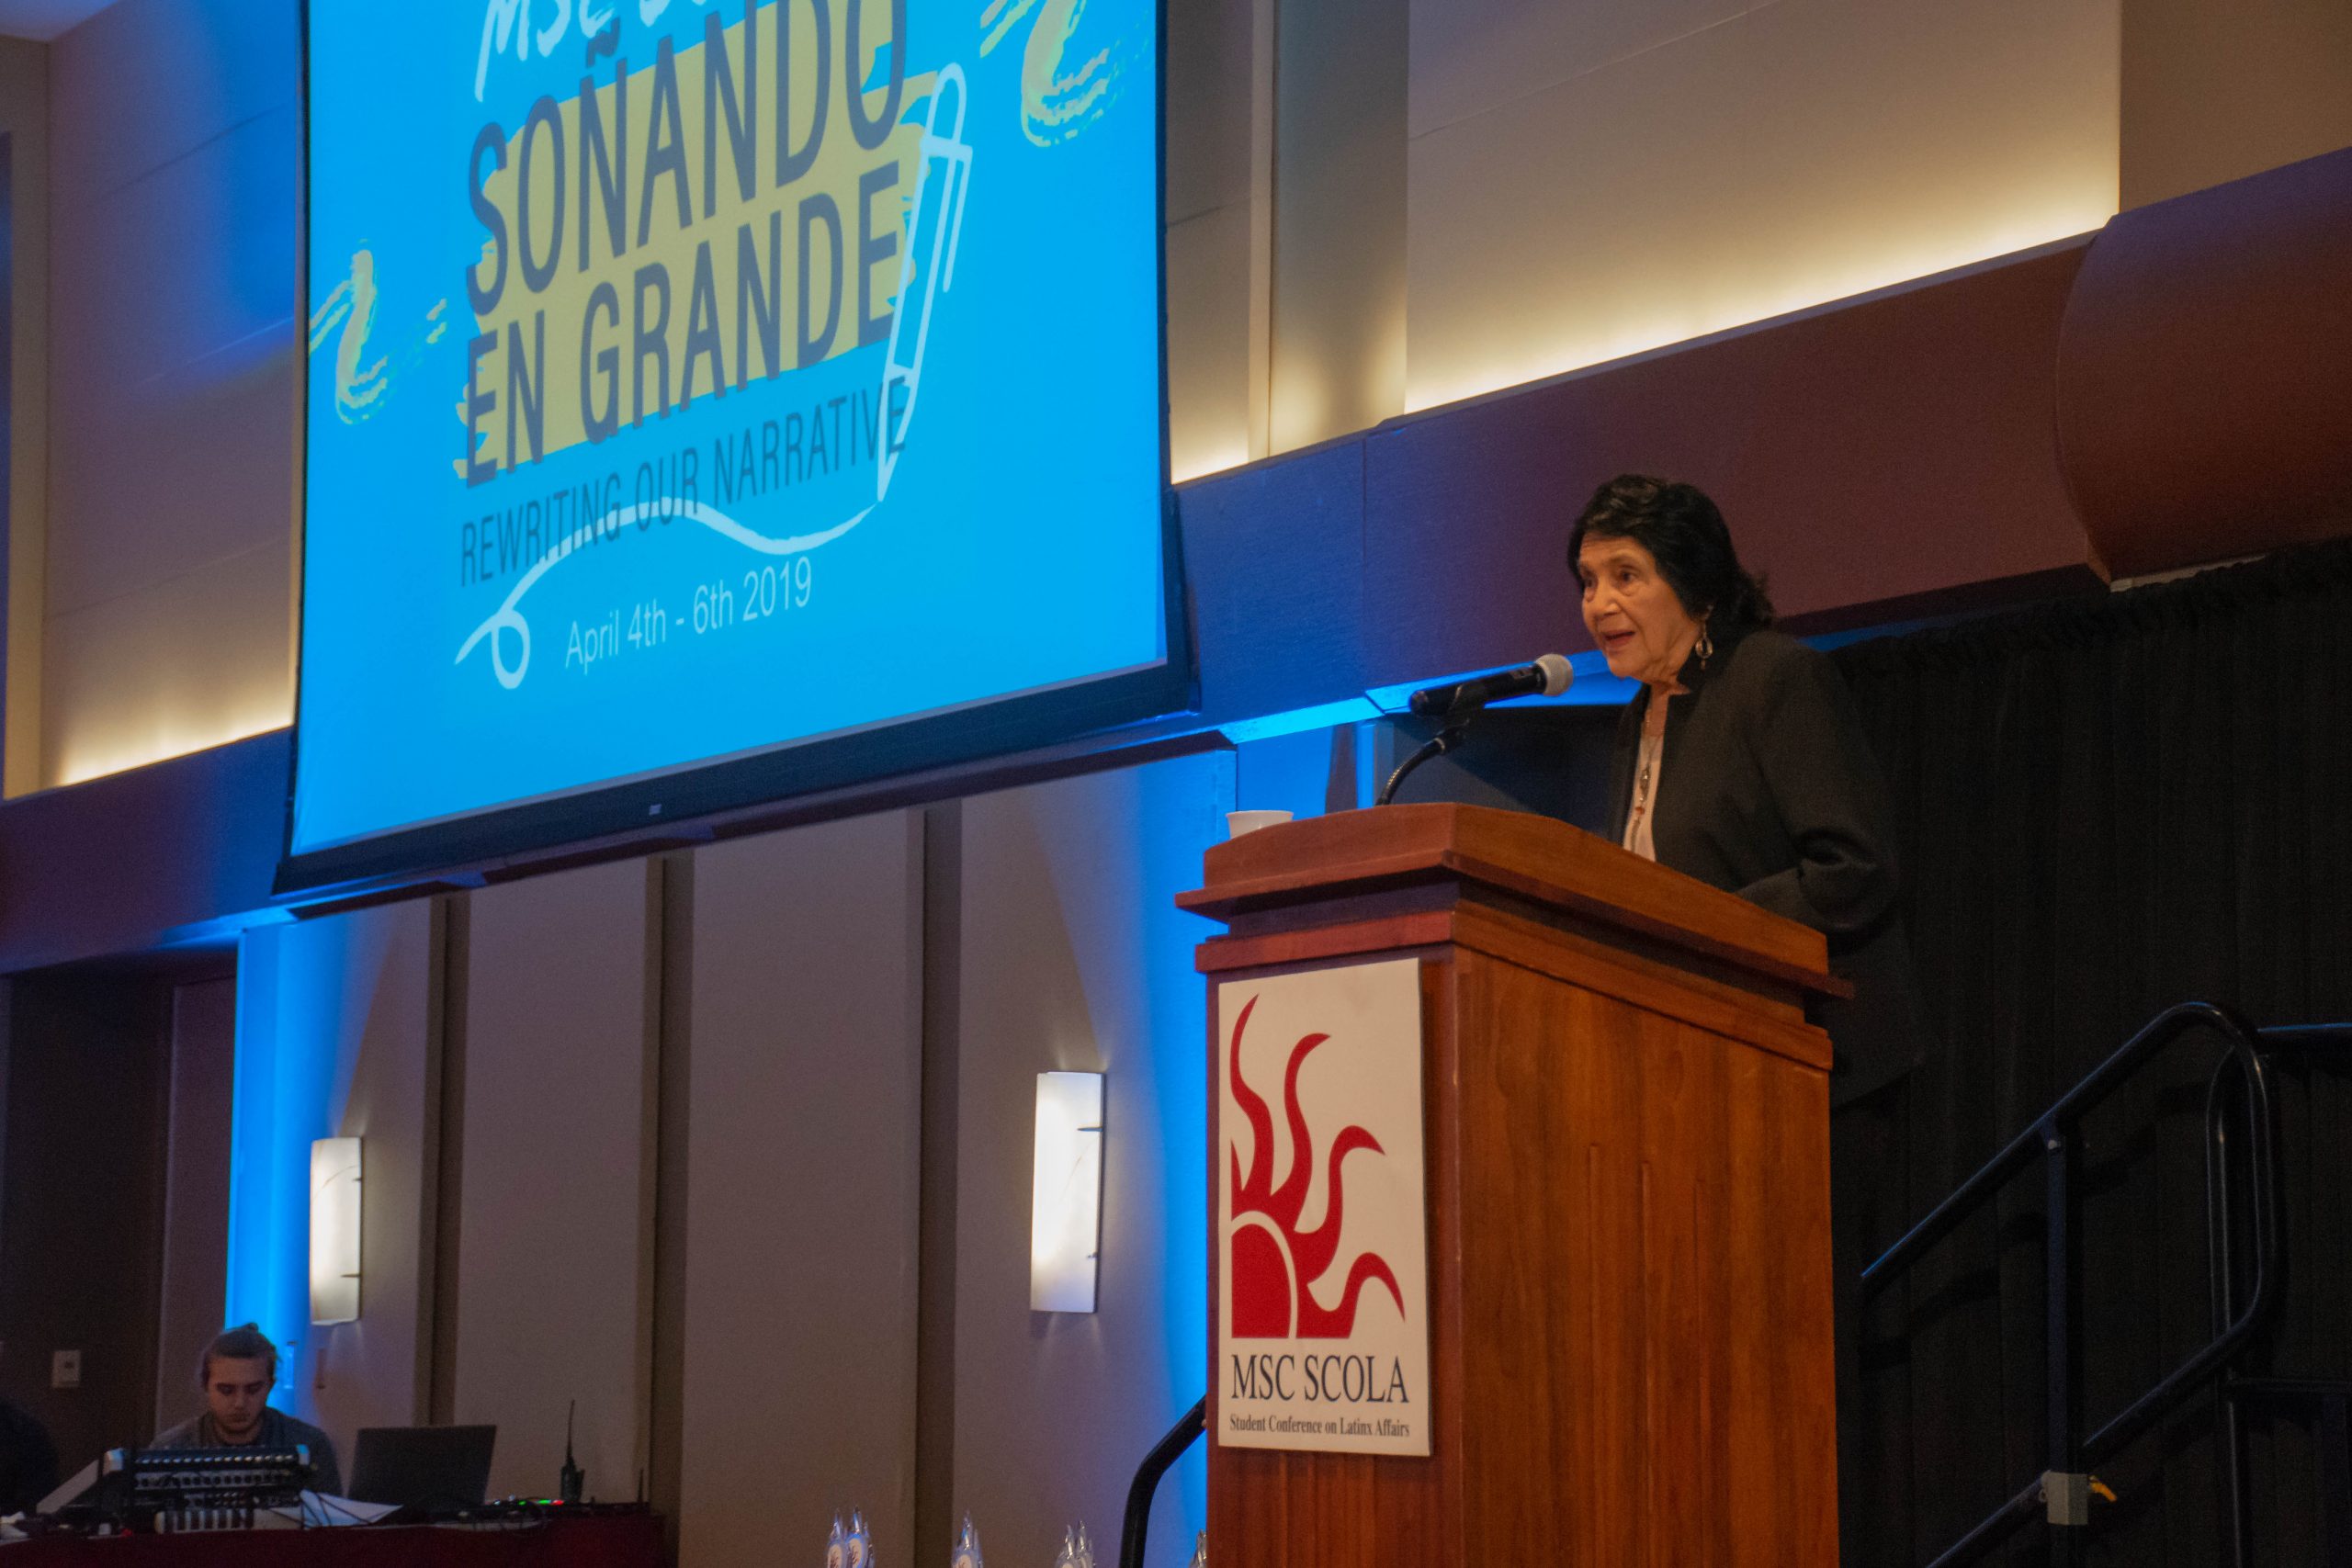 Dolores Huerta speaking behind a podium at MSC SCOLA 2019